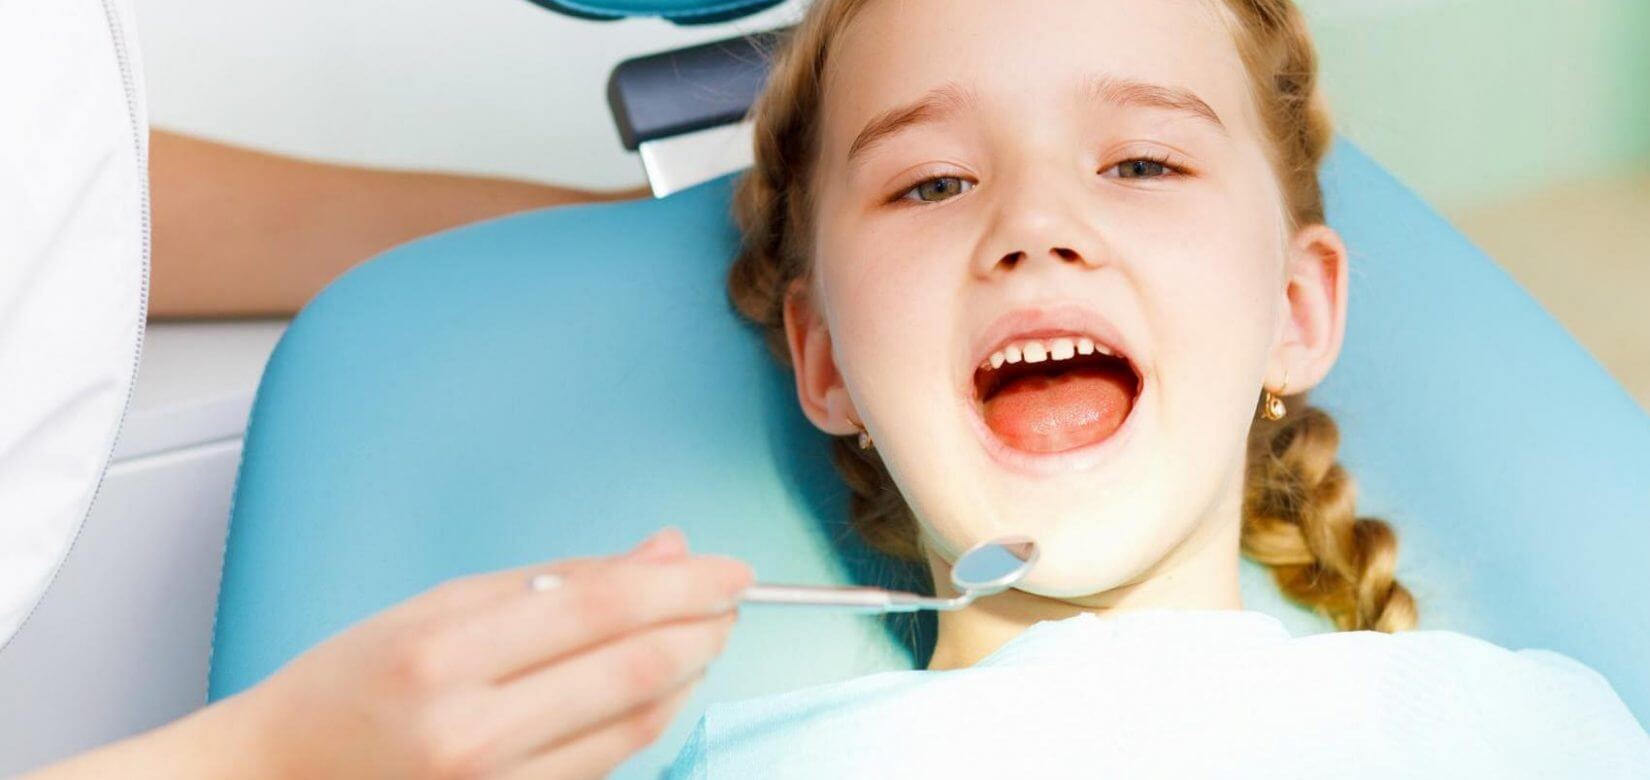 Dentist pass: 40 ευρώ ανά παιδί για οδοντιατρικό έλεγχο - Ποιοι δικαιούνται τα κουπόνια